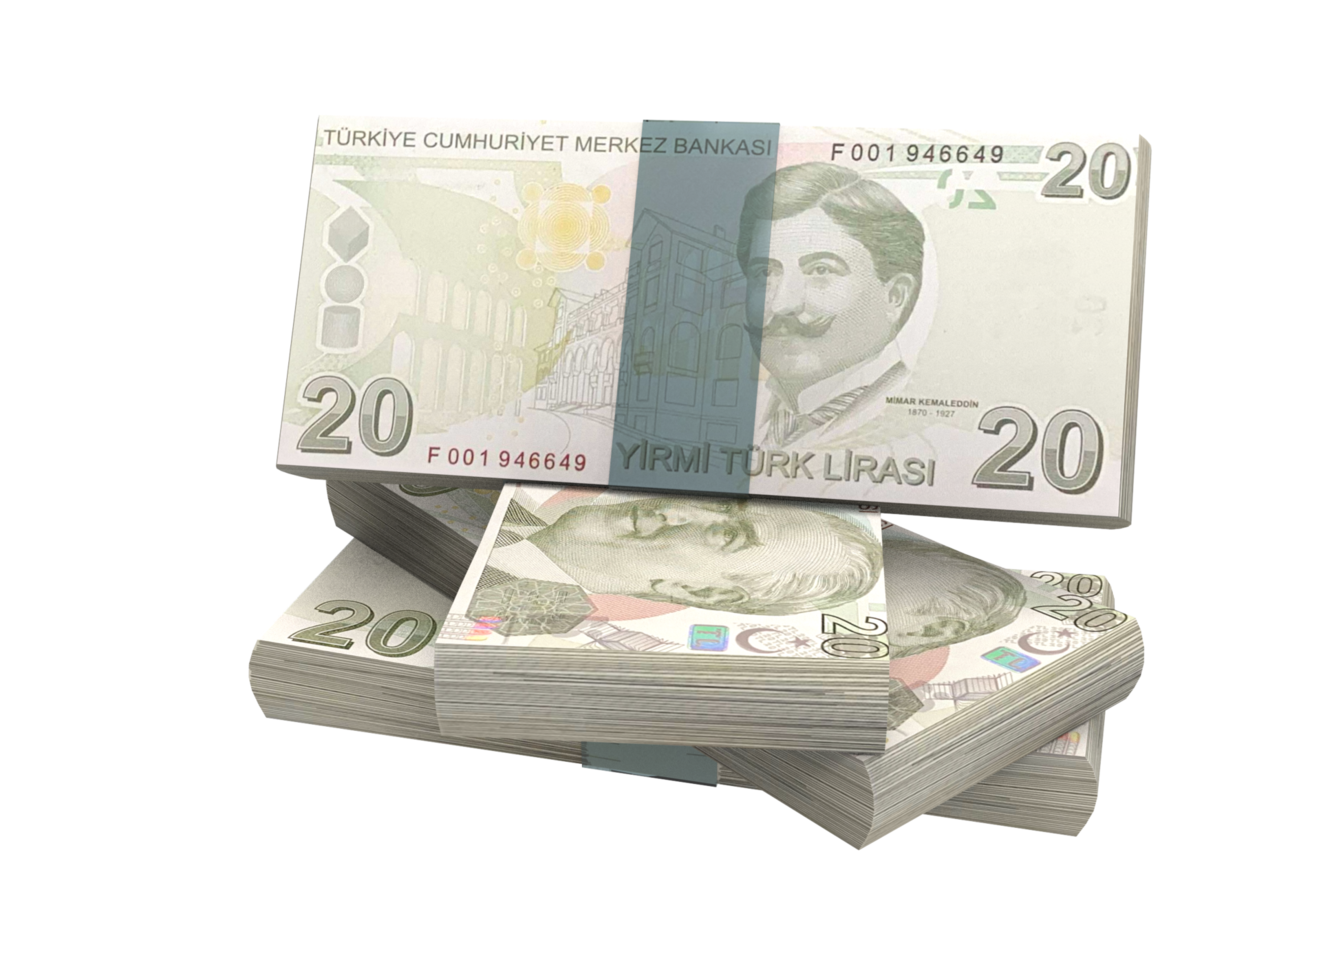 türkische lira währung png